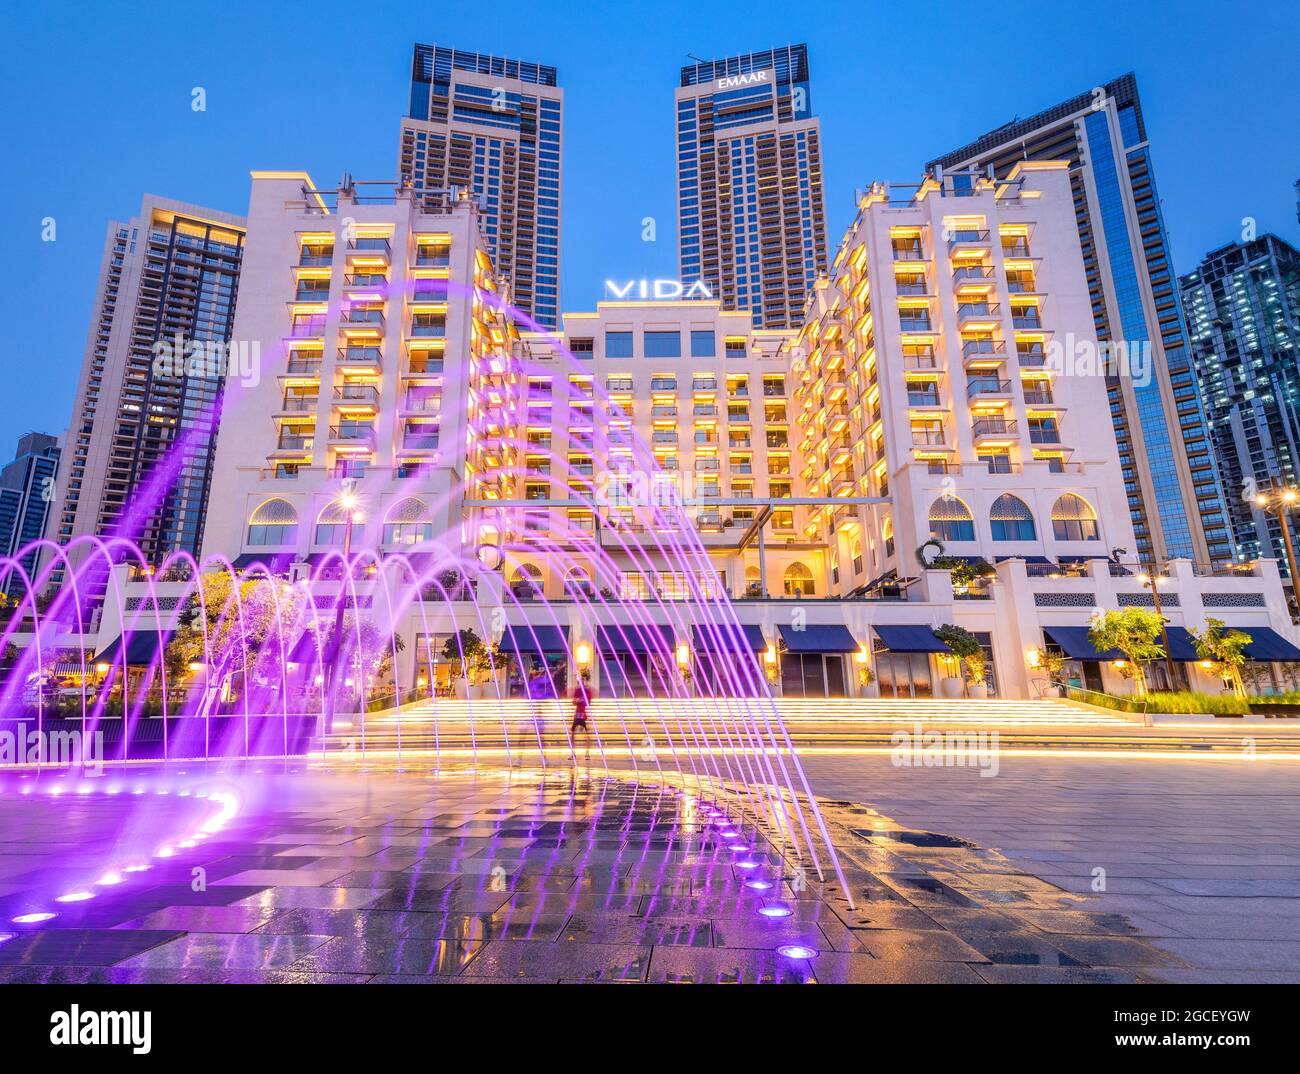 24 February 2021, Dubai, UAE: Vida hotel and illuminated fountain panoramic view in Dubai Marina Creek Harbour Stock Photo